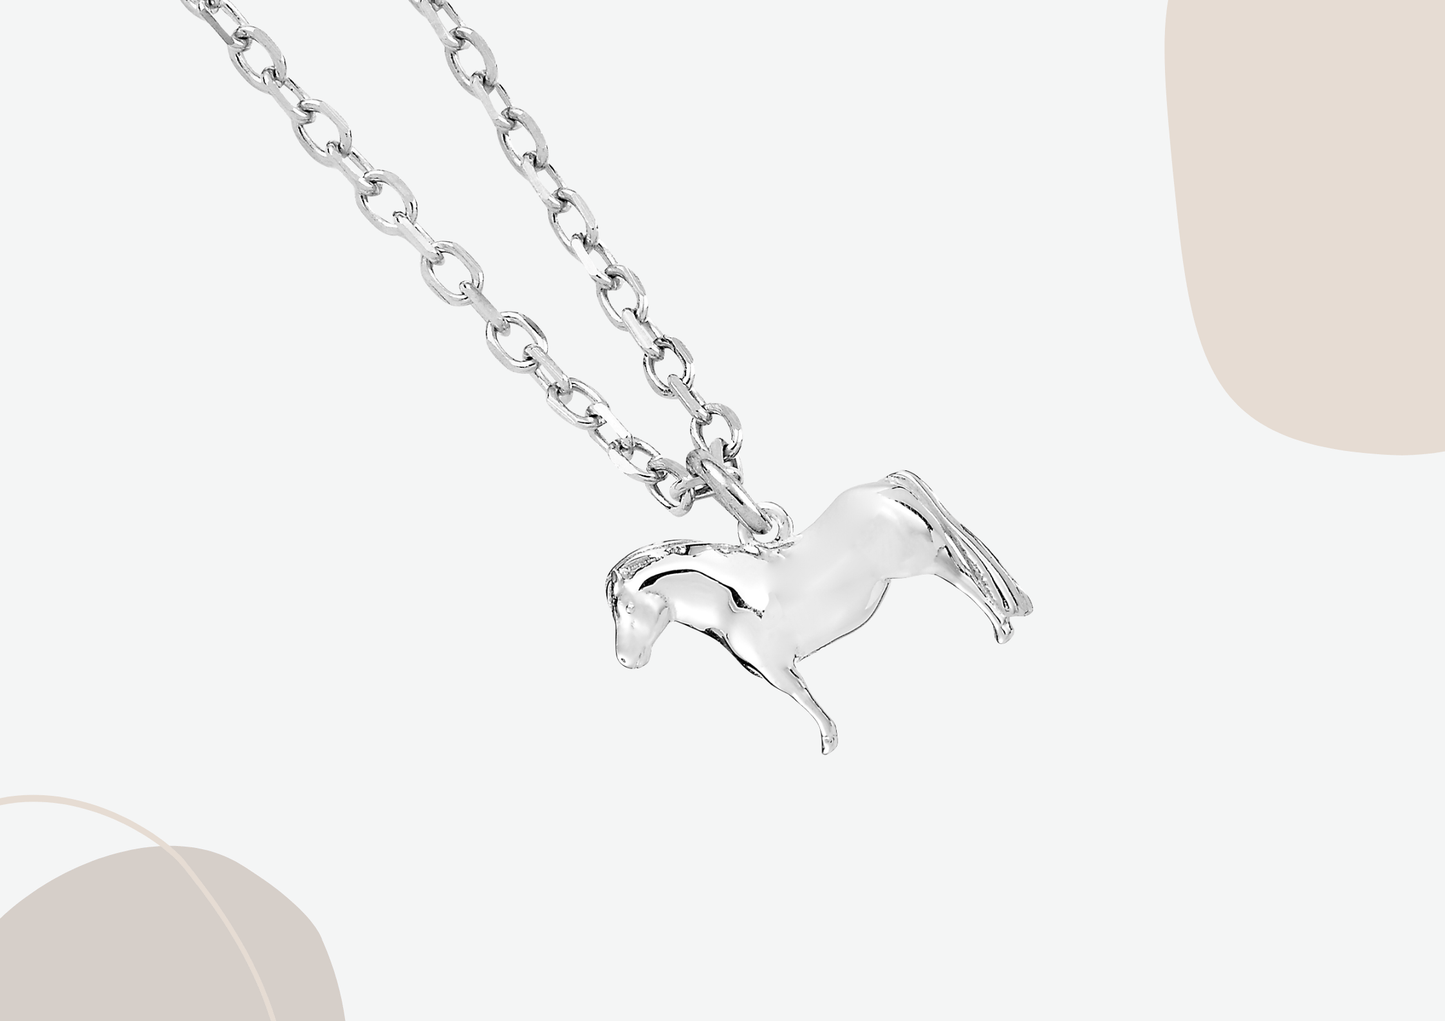 Pony Silver Necklace - MYLEE London